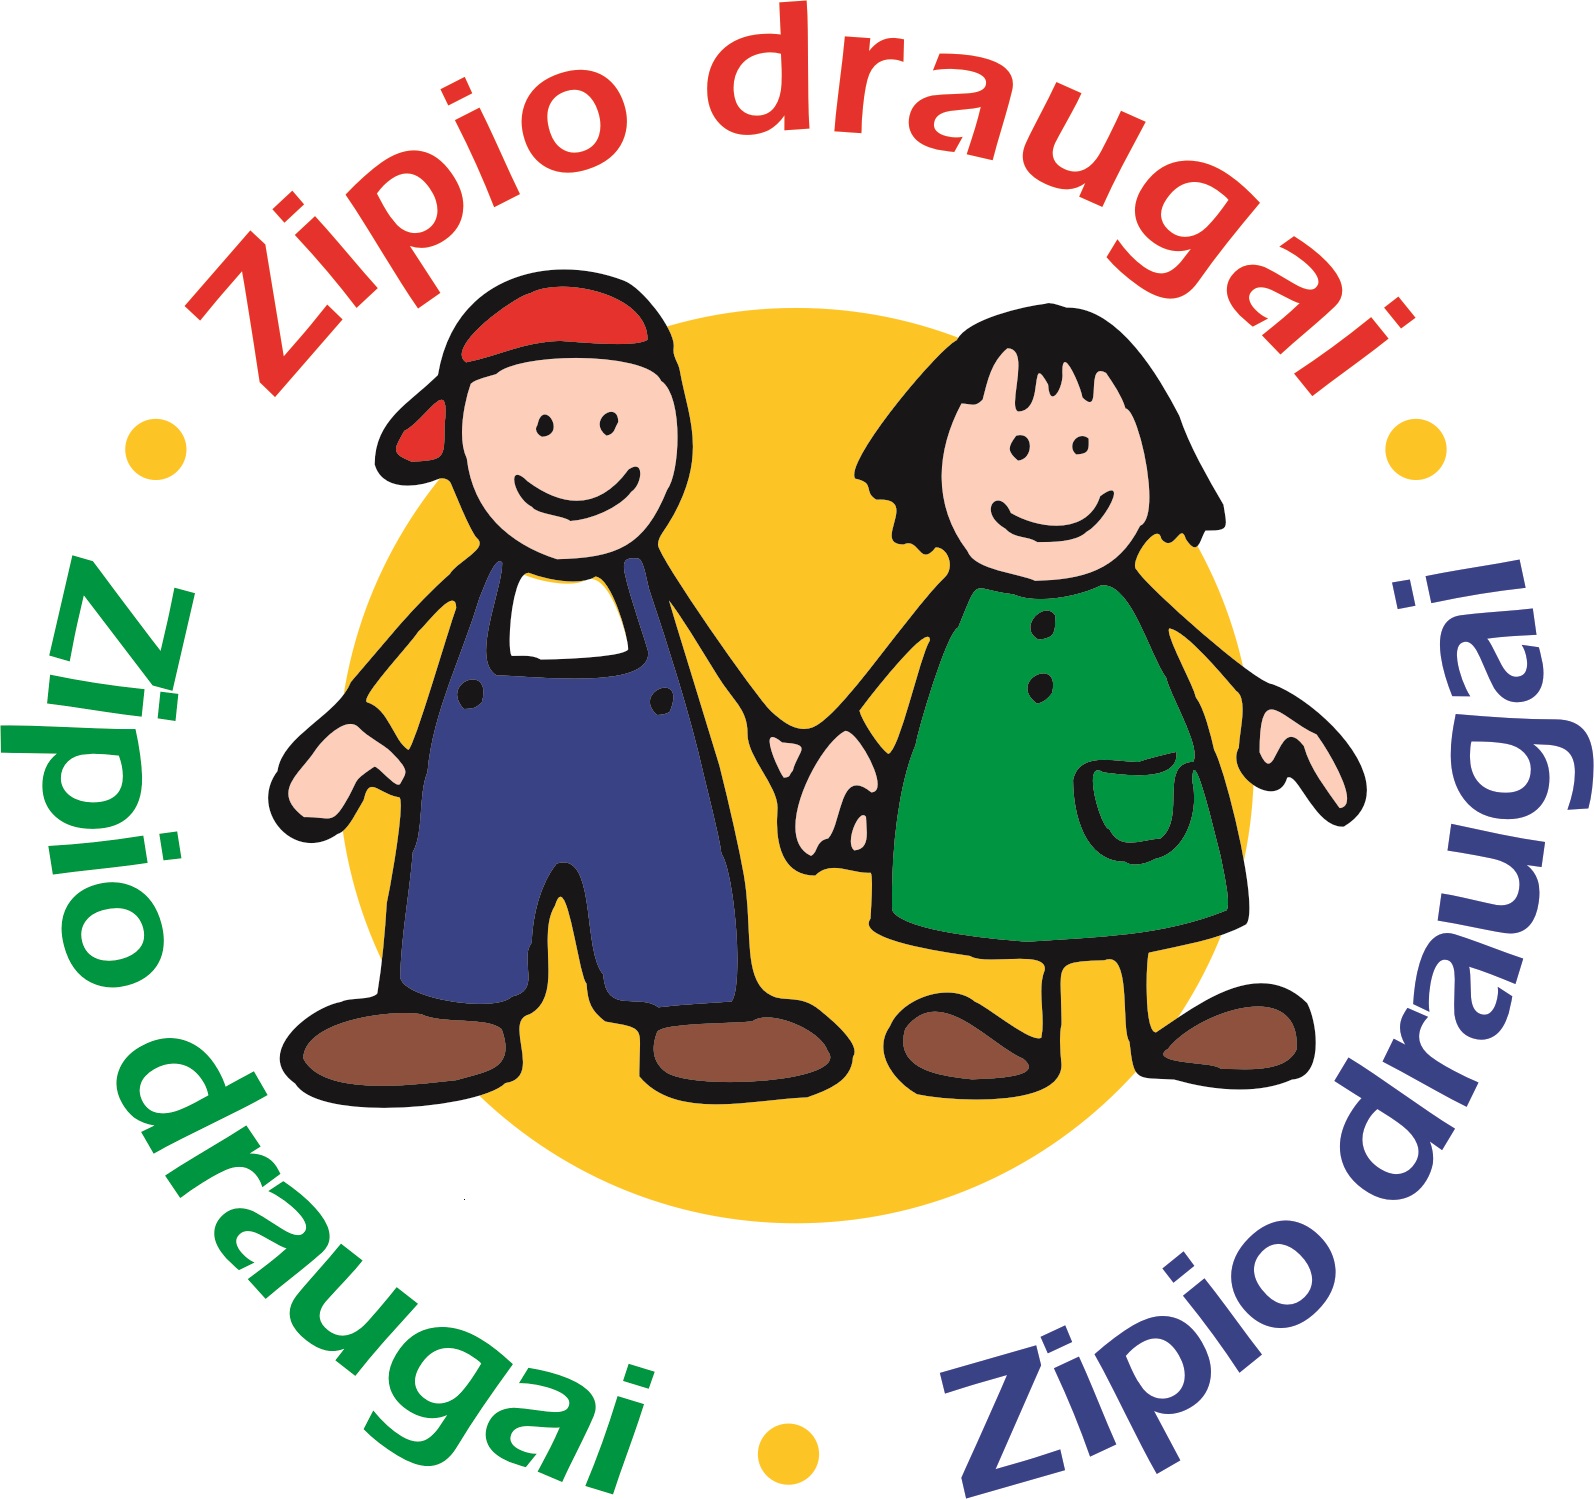 Zipio draugai logo Lietuva